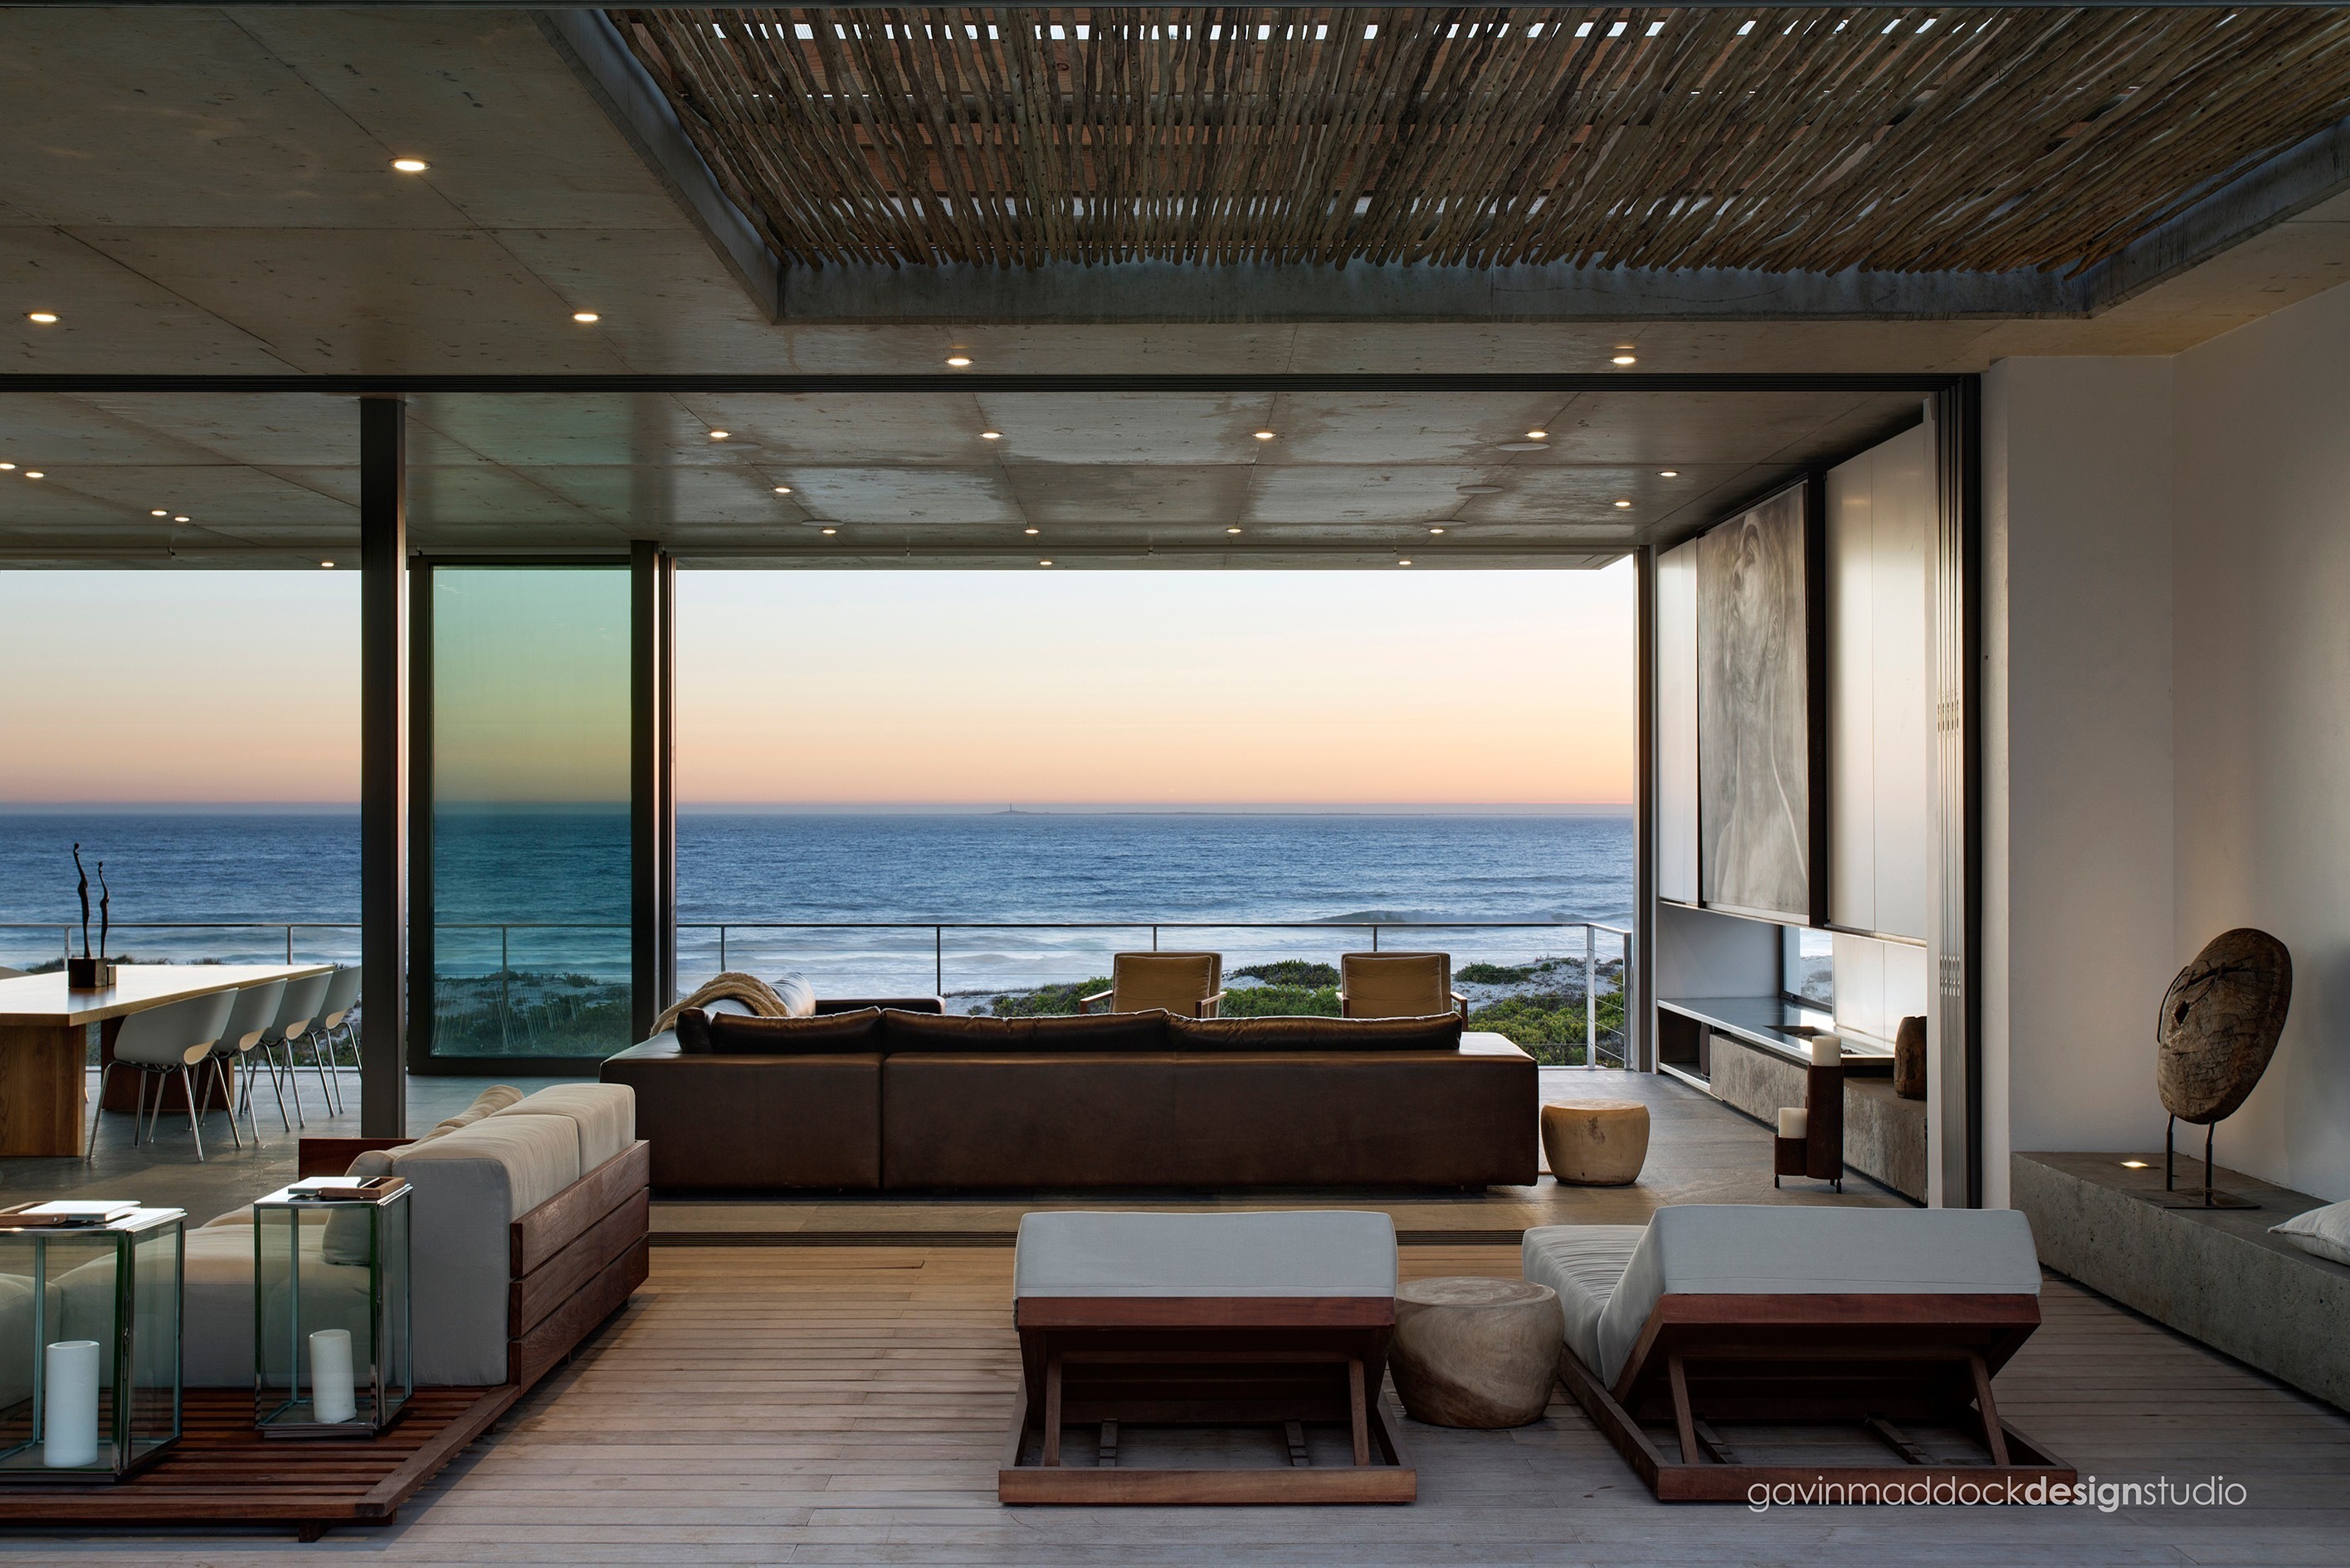 Домик с видом на море. Вилла с видом на океан. Вилла с панорамными окнами. Дом с видом на море.